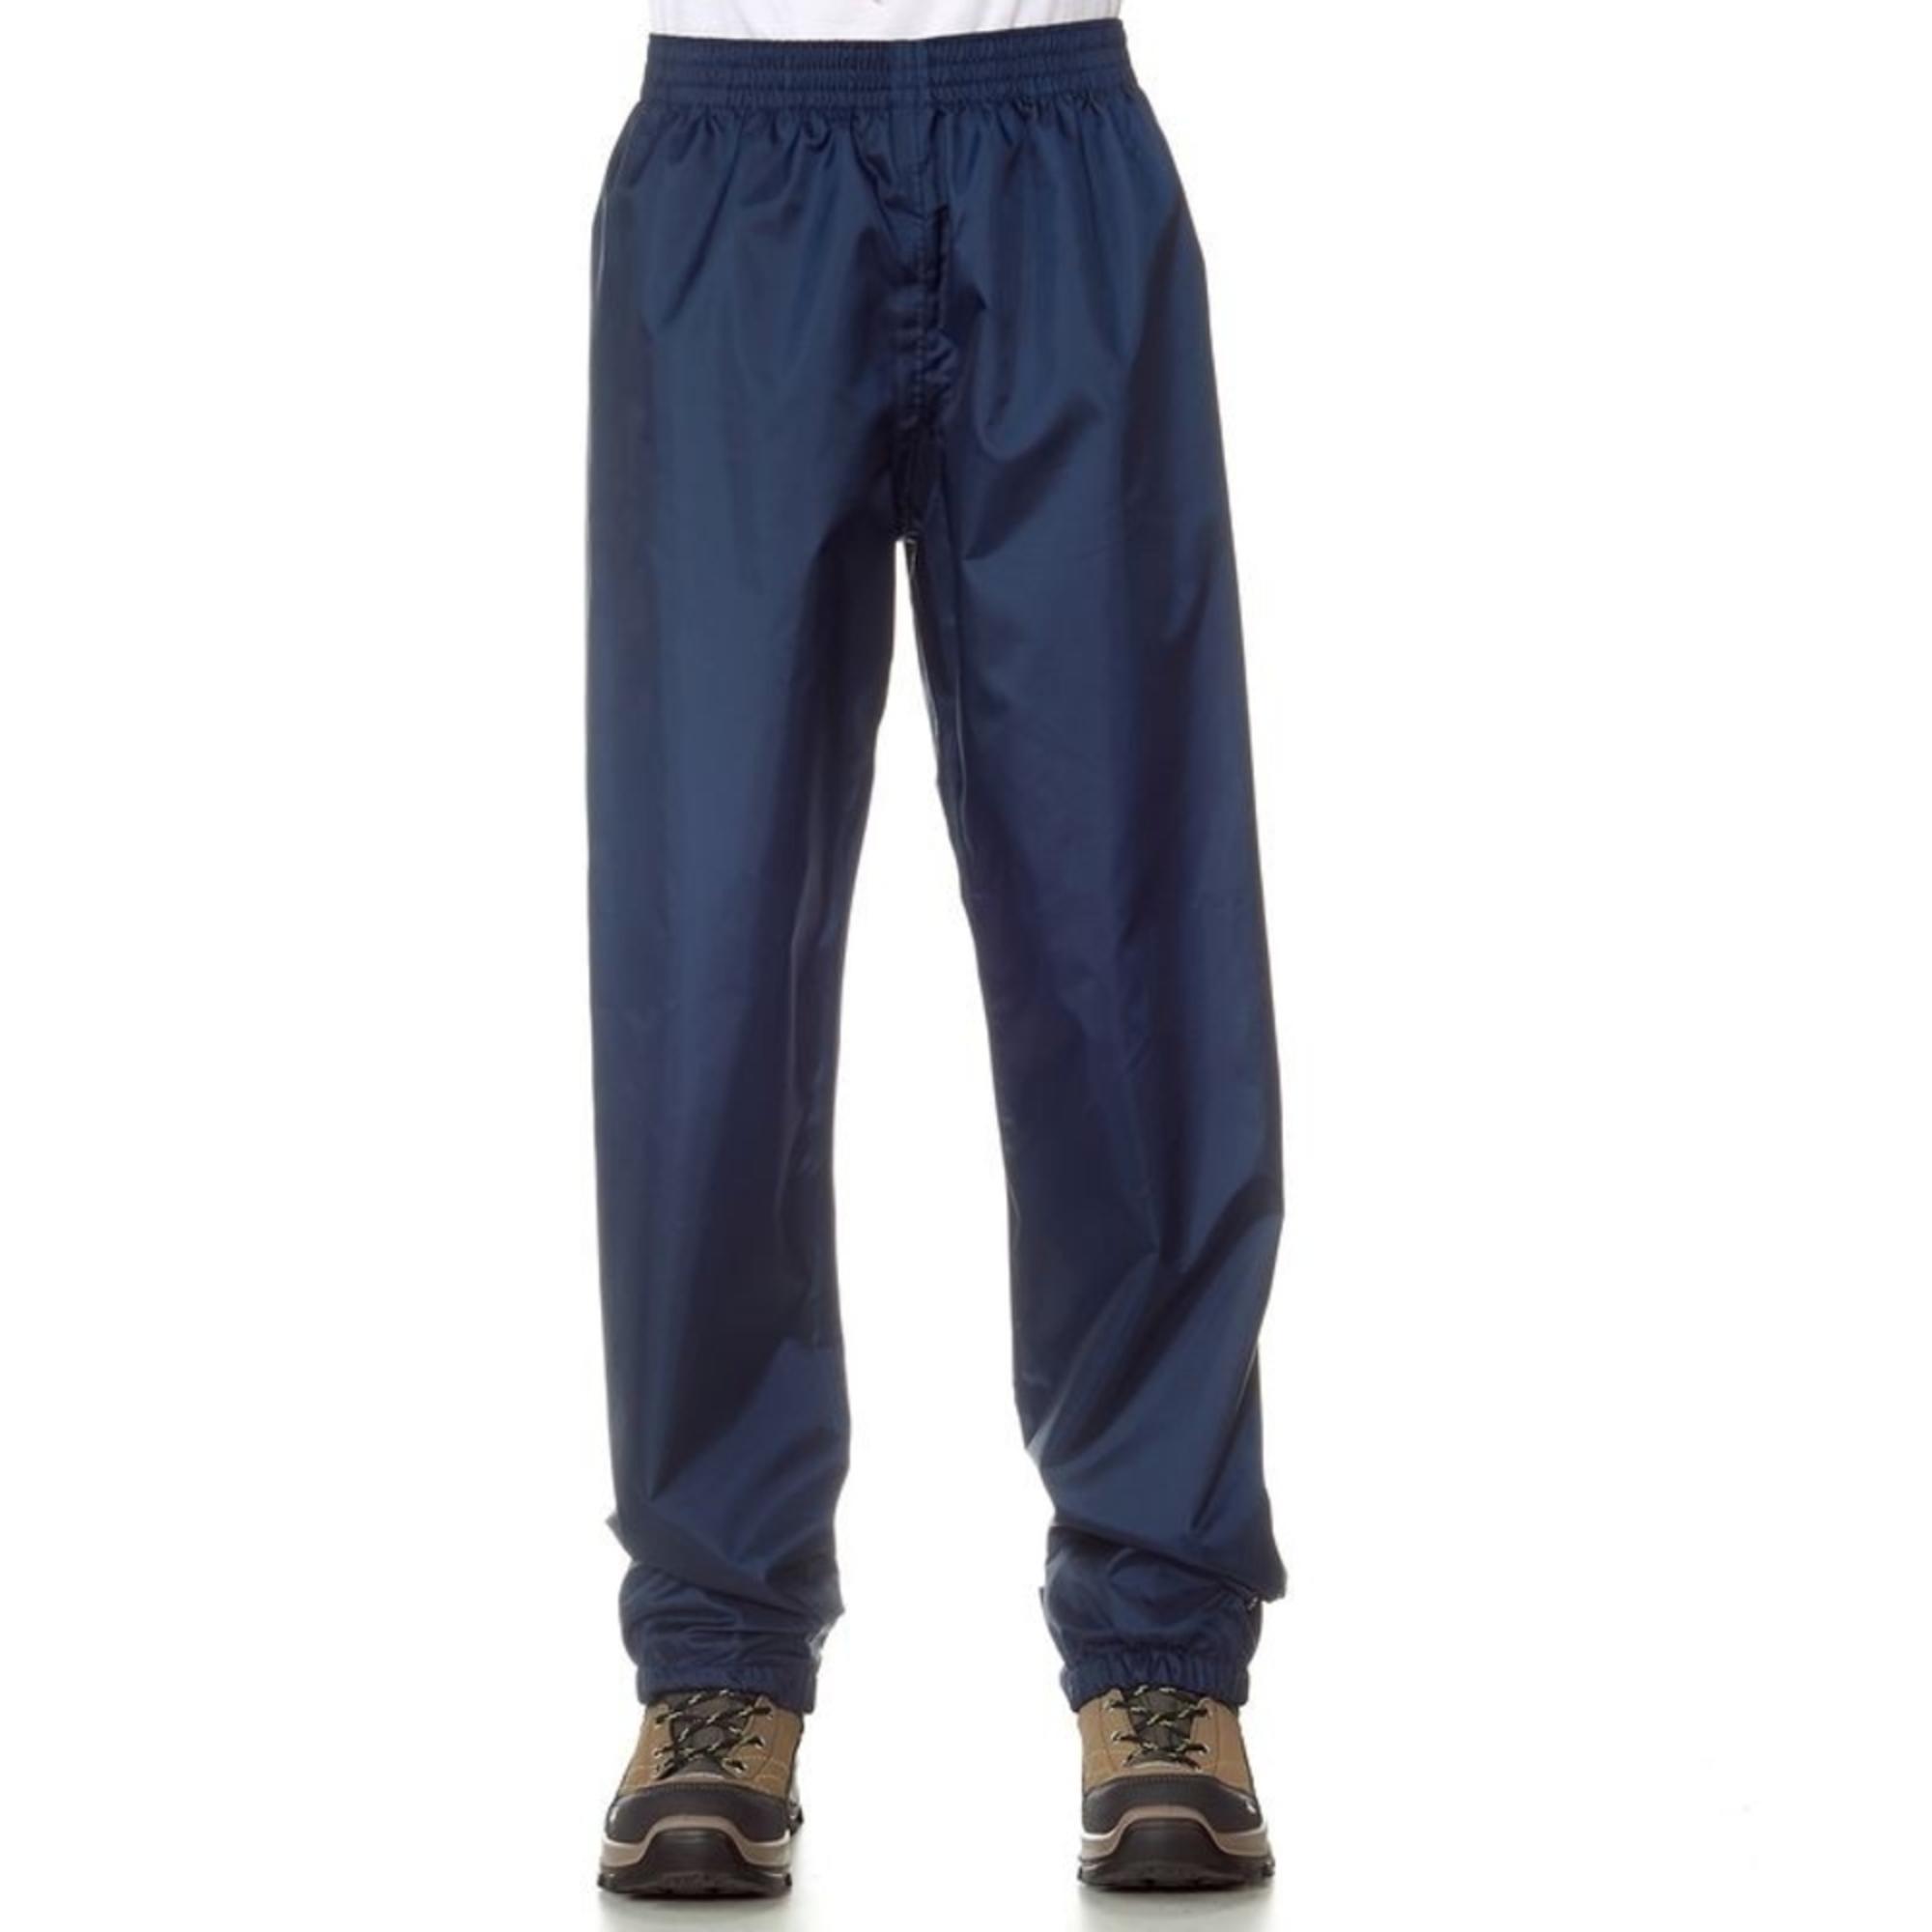 Buy Navy Blue Trousers  Pants for Men by Wildcraft Online  Ajiocom